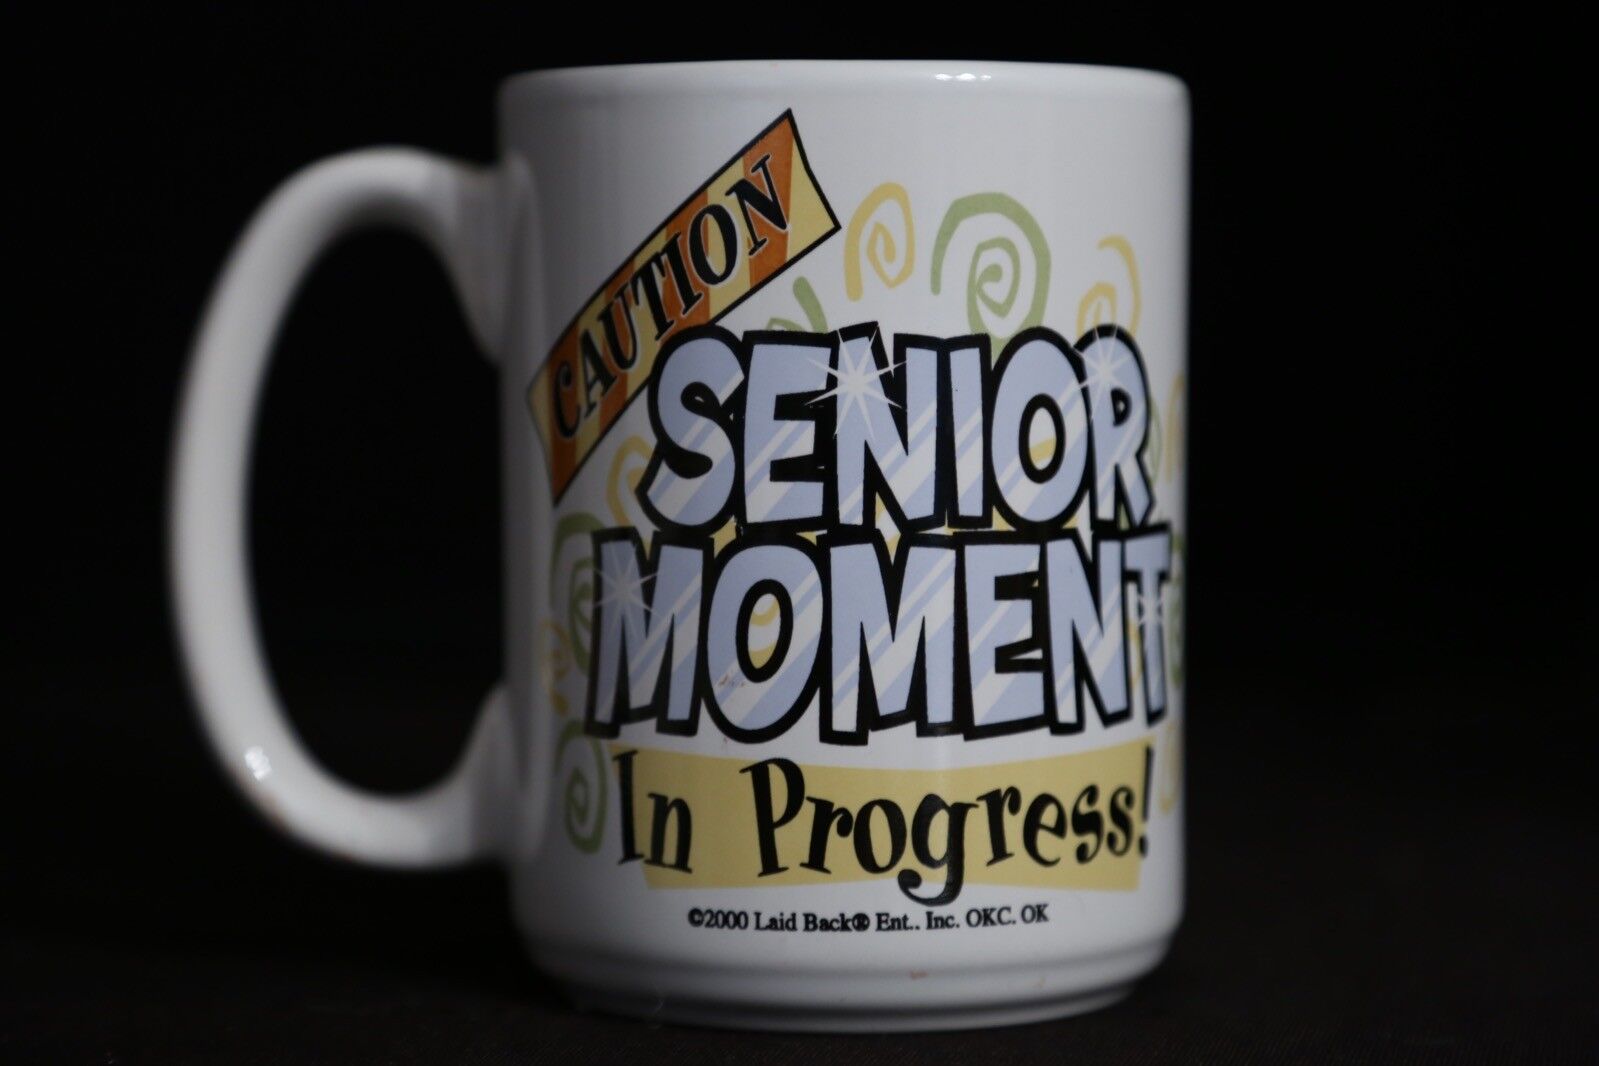 Caution: Senior Moment in Progess 2000 Laid Back Entertainment Mug